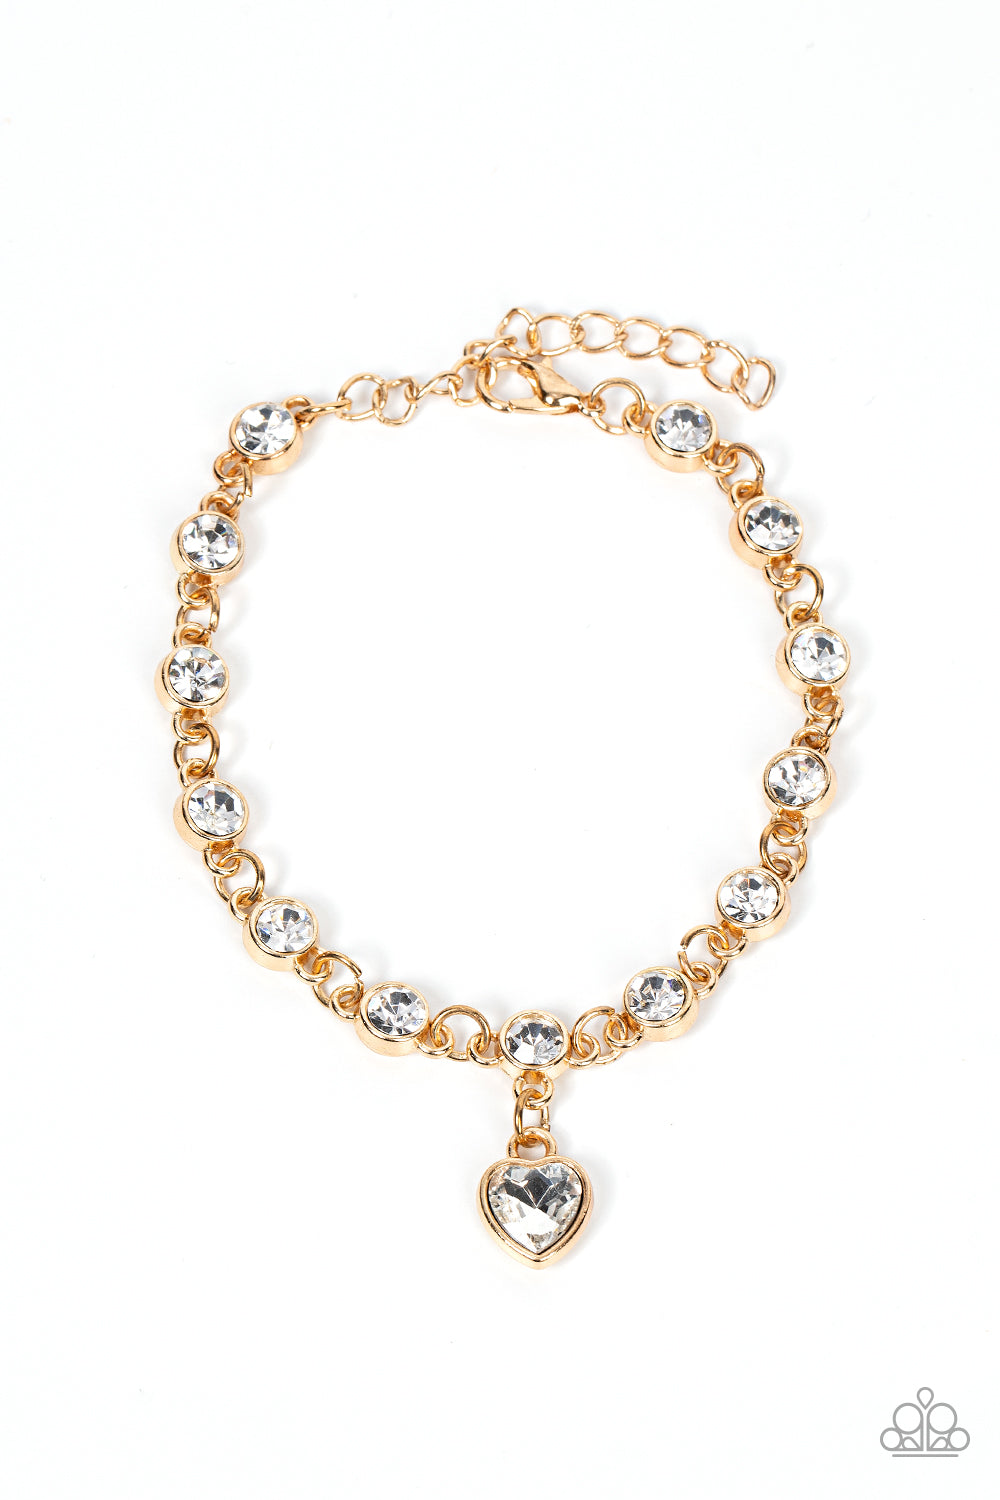 Truly Lovely - White Rhinestone Heart Gold Bracelet - Paparazzi Accessories